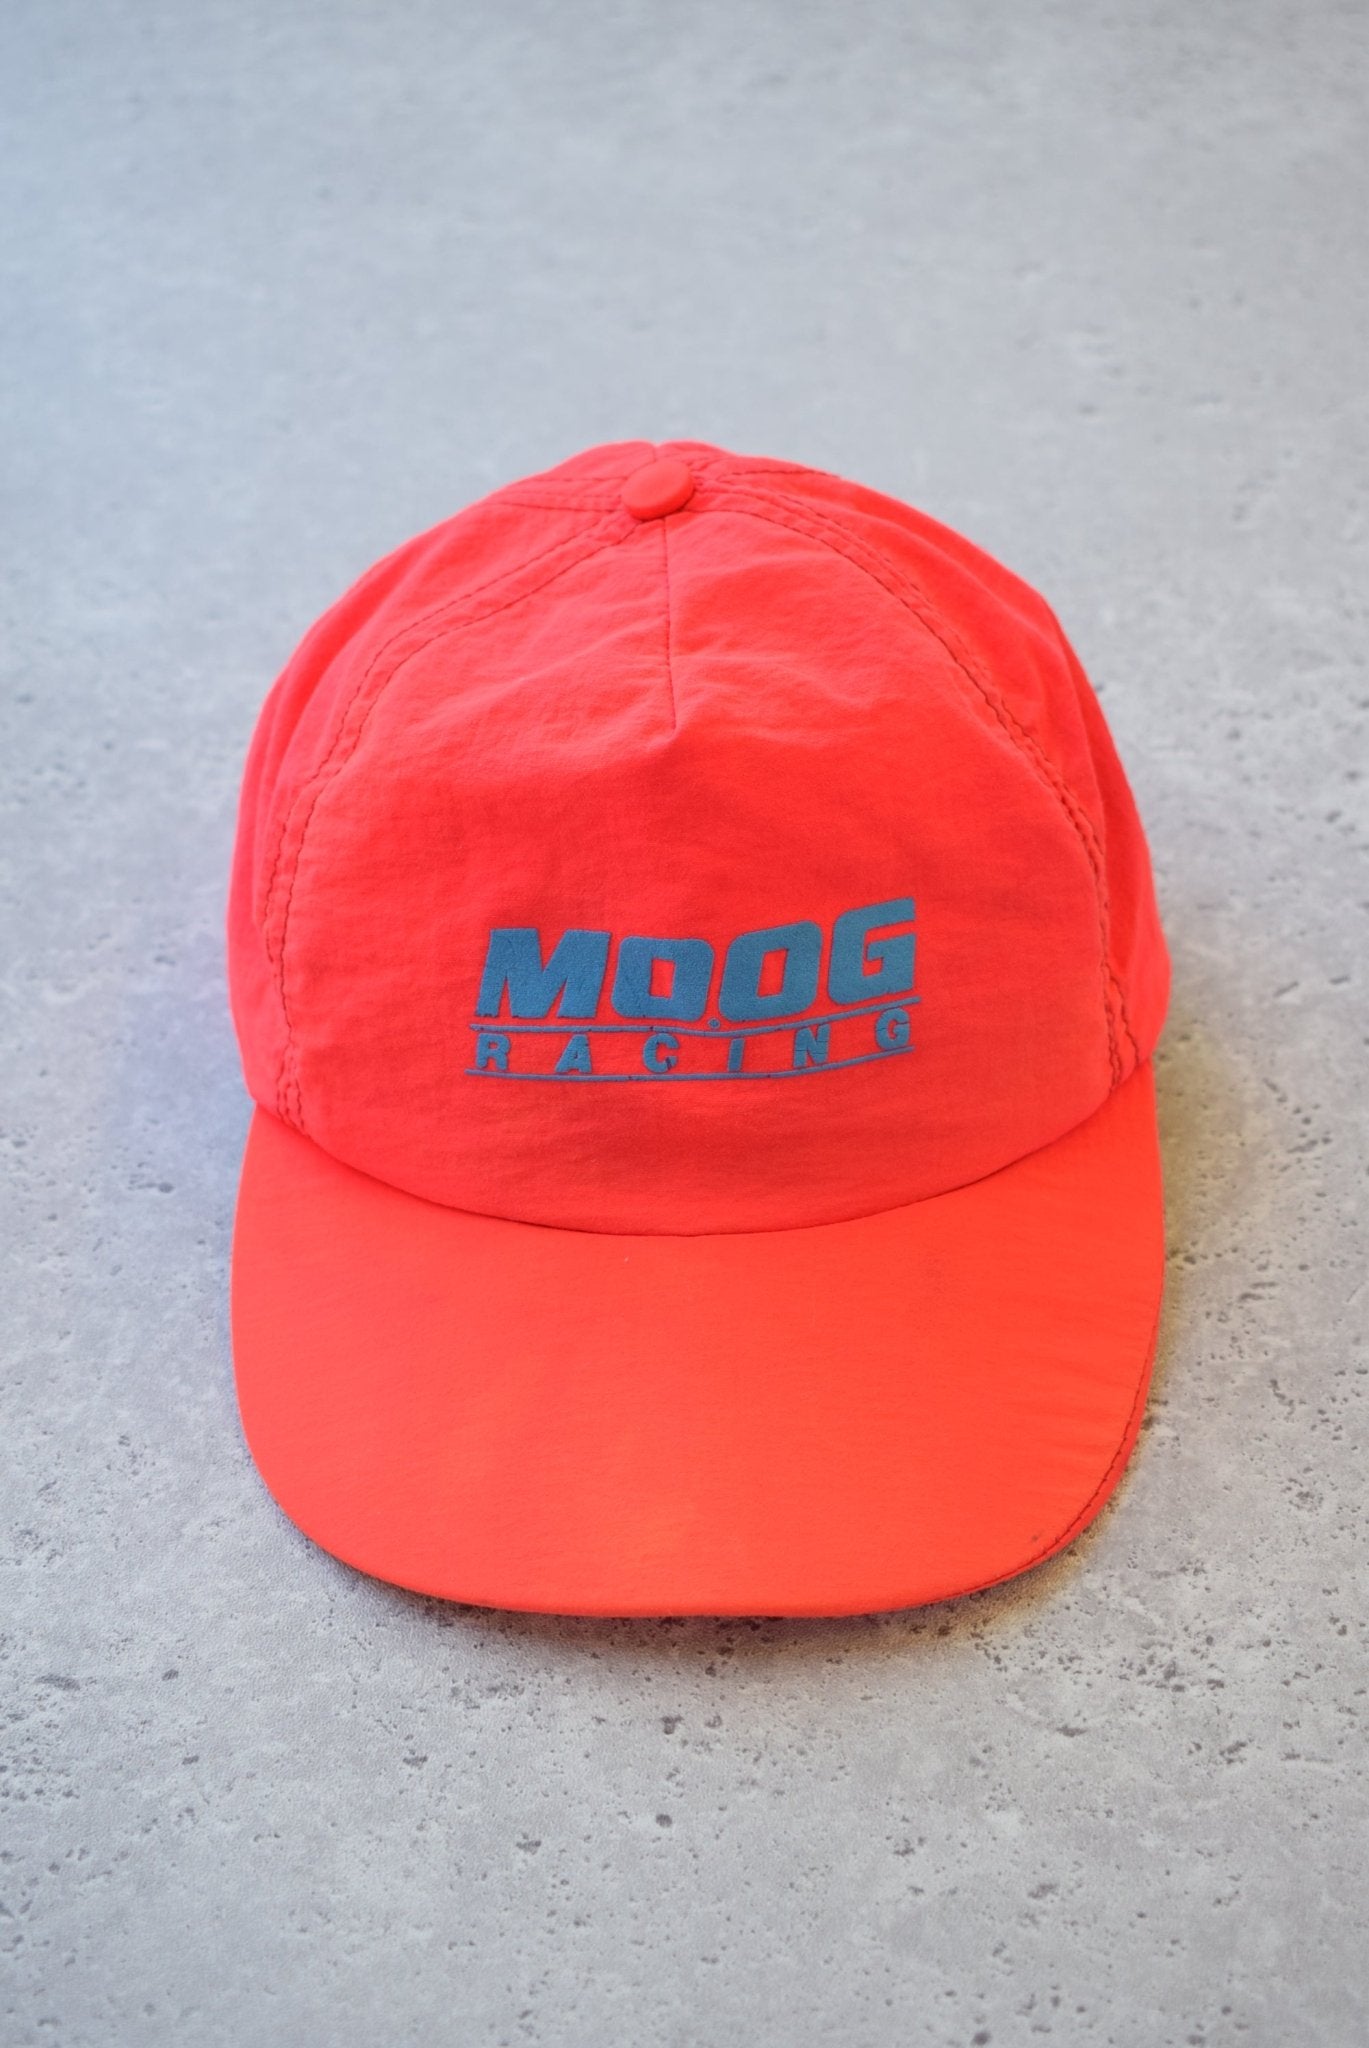 Vintage 90s Moog Racing Hat - Retrospective Store